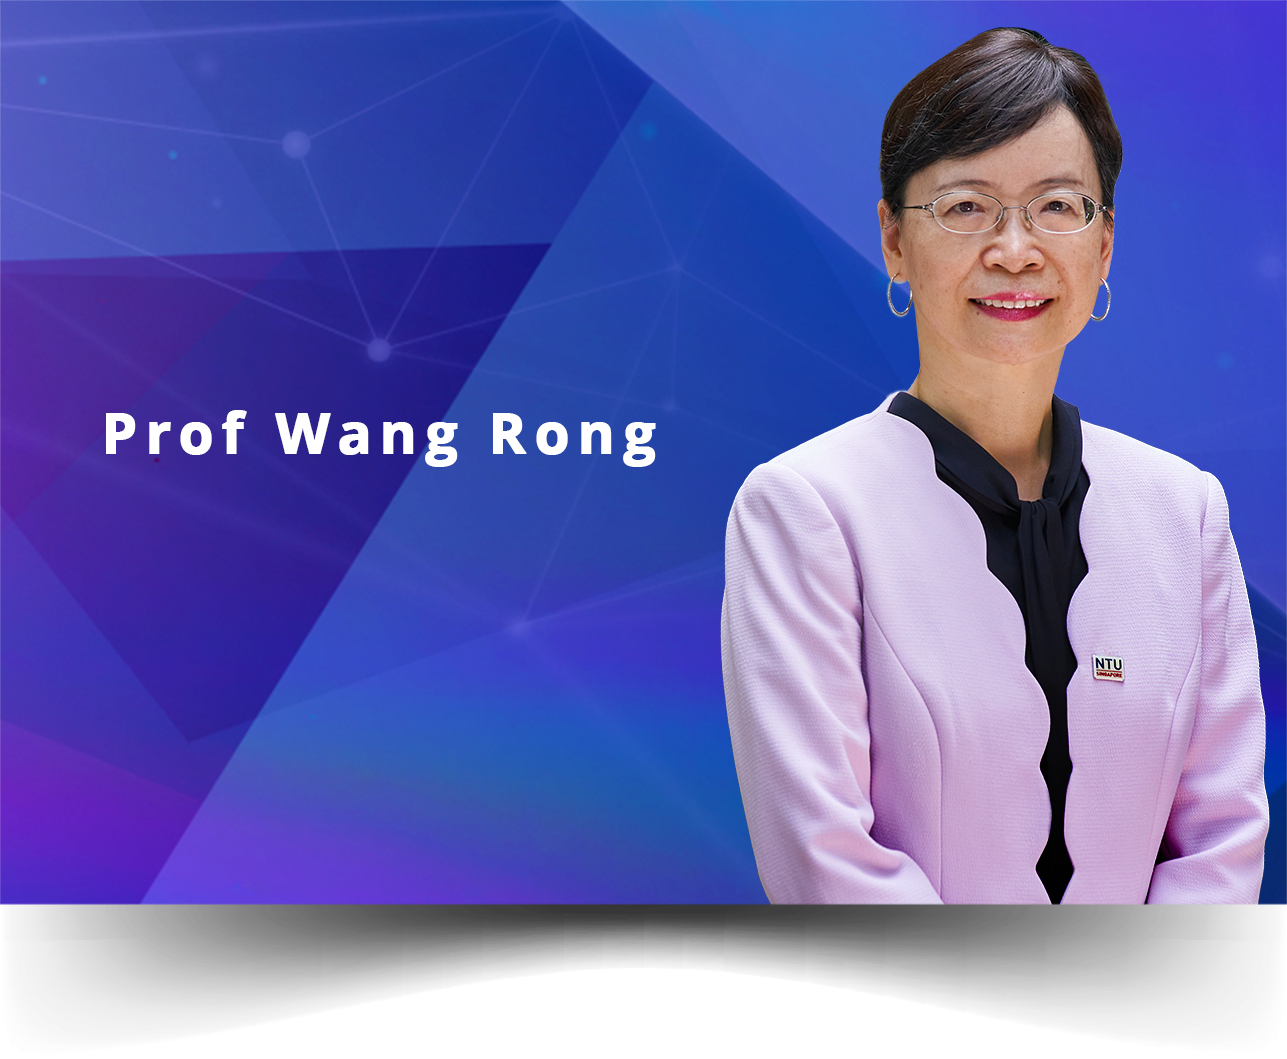 PROFESSOR WANG RONG